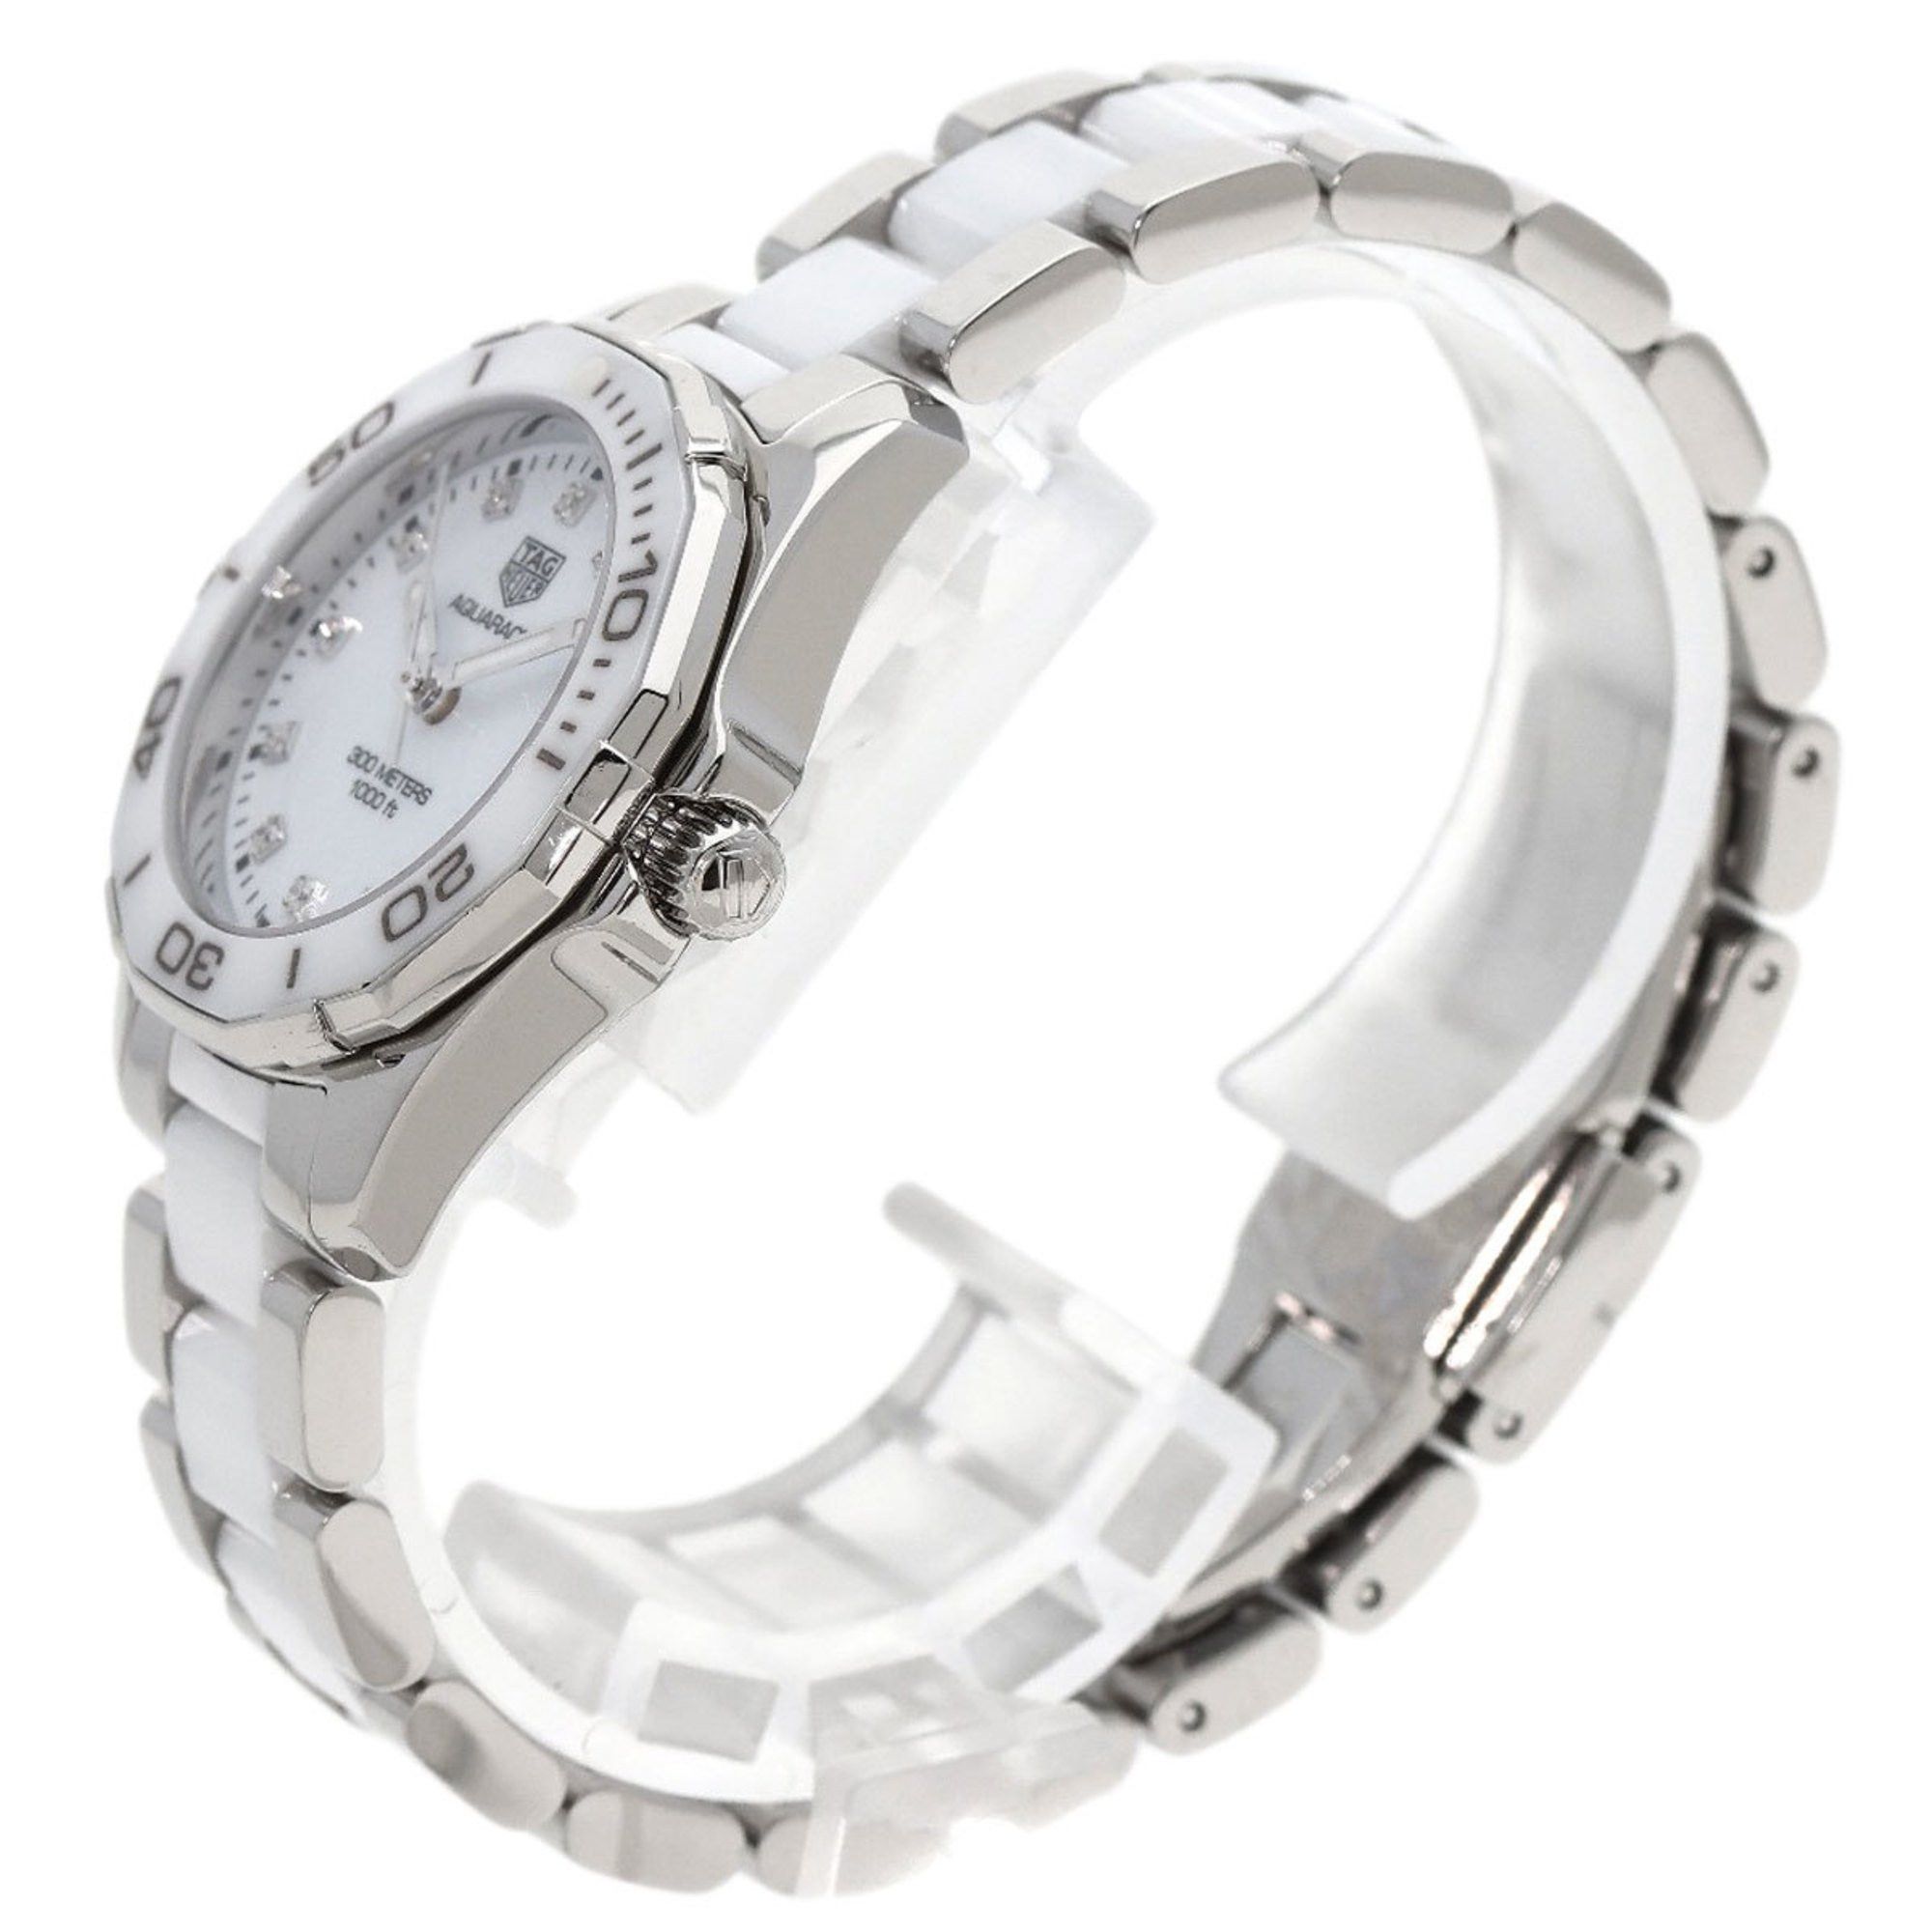 Tag Heuer TAG Heuer WAY141D Aquaracer 11P Diamond Watch Stainless Steel ...